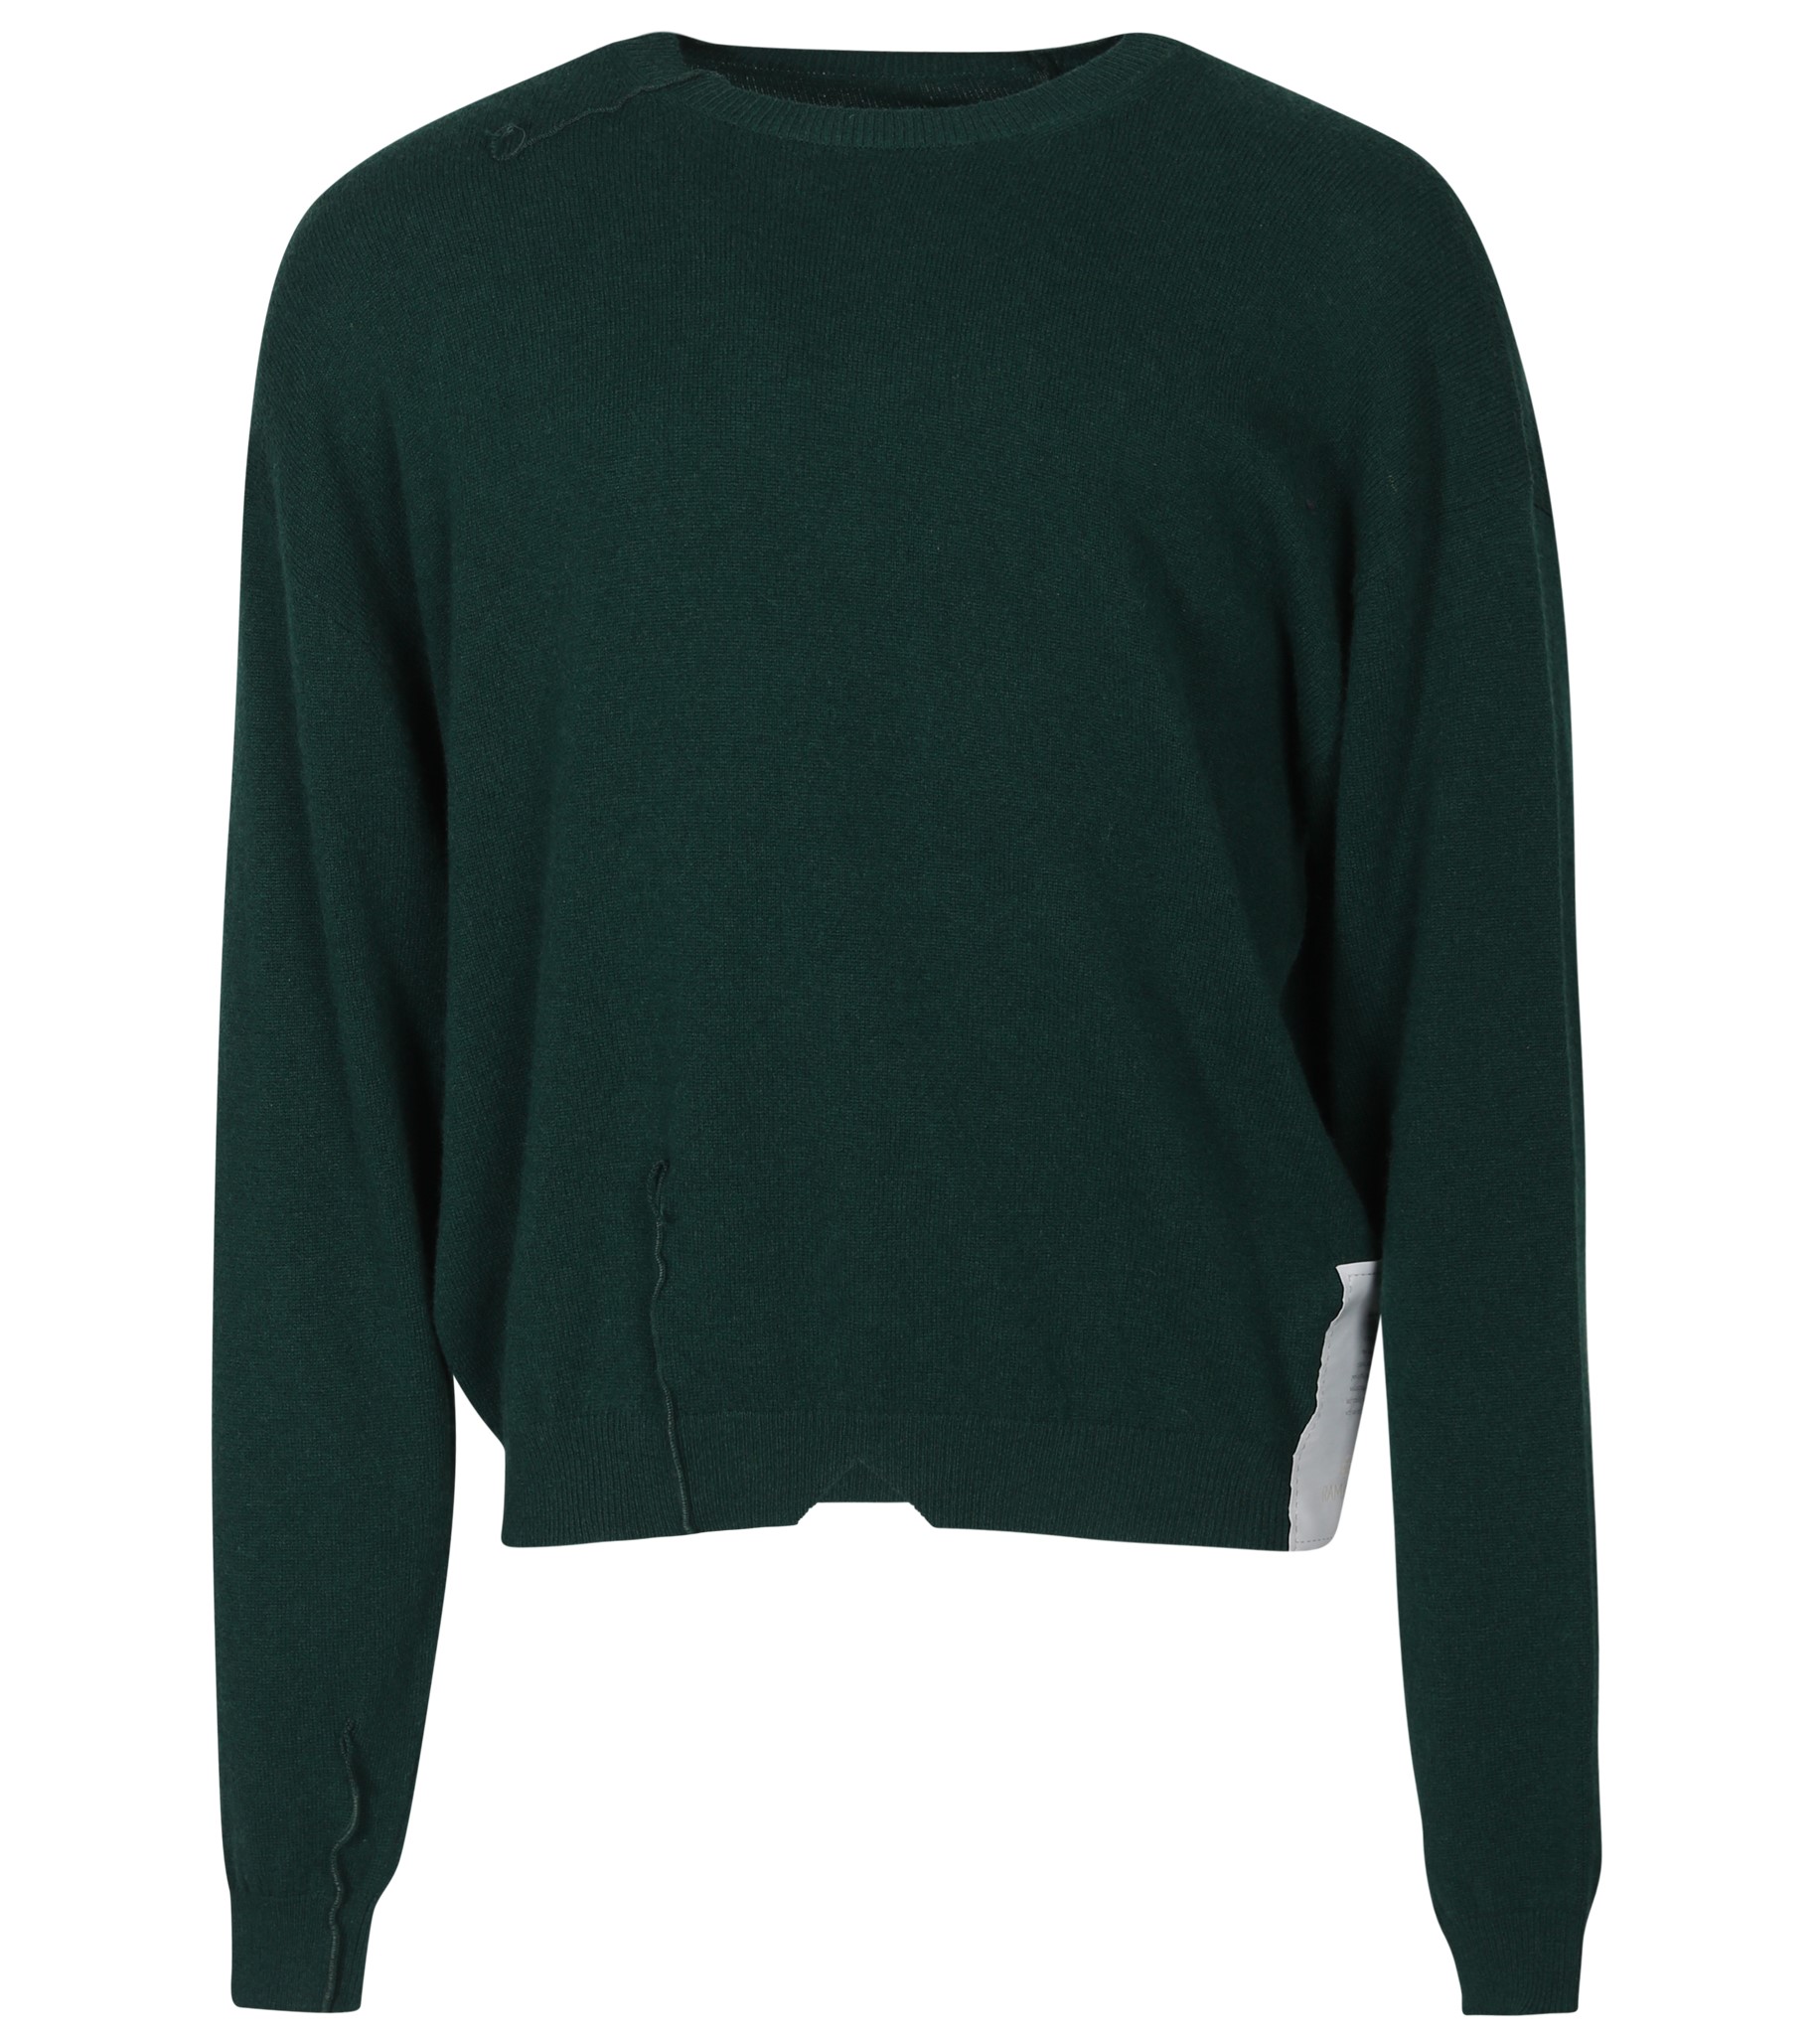 RAMAEL Infinity Cashmere Sweater in Green